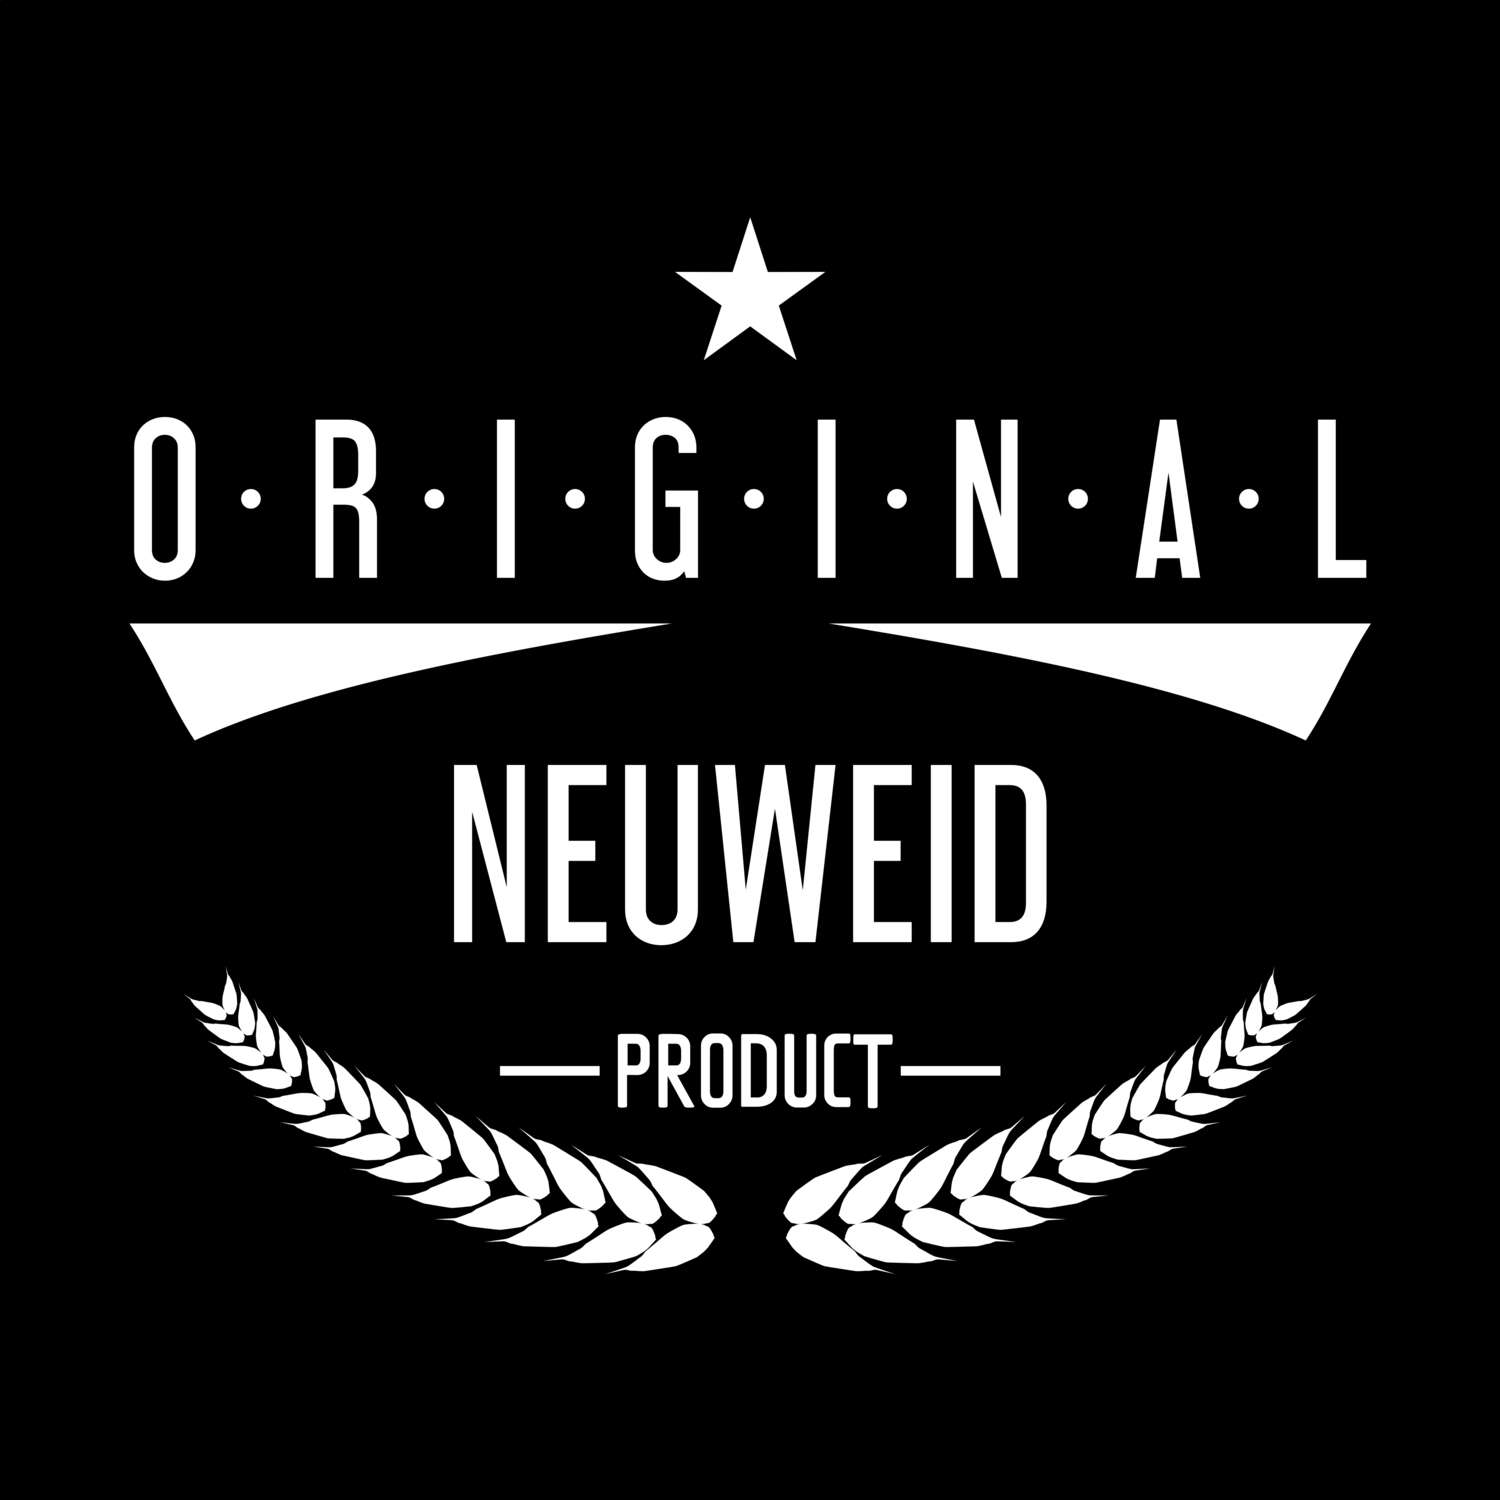 Neuweid T-Shirt »Original Product«